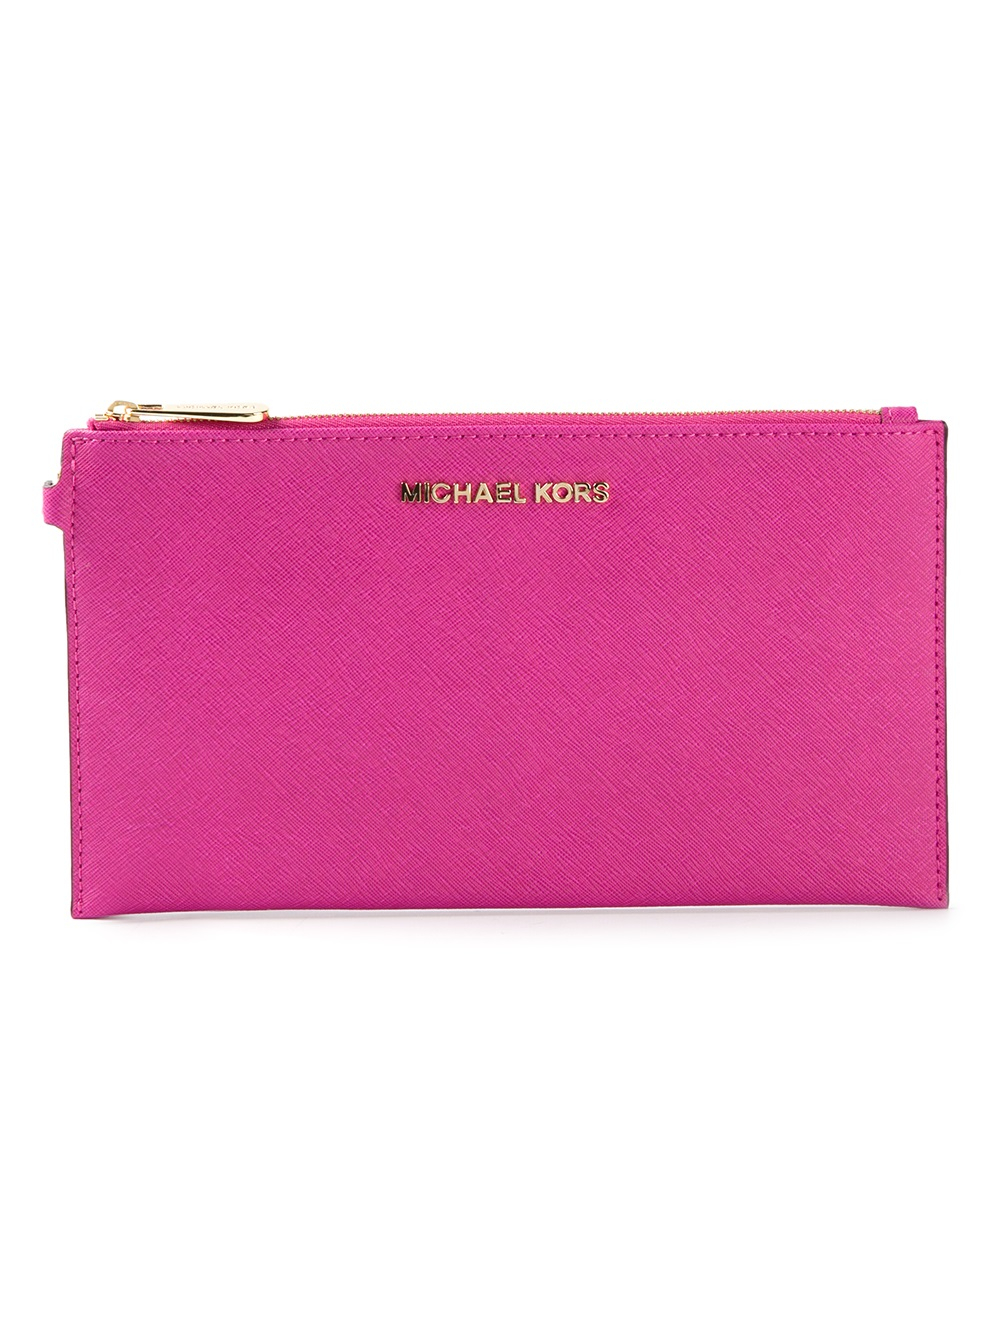 Michael Michael Kors 'Jet Set' Wallet in Pink (pink & purple) | Lyst